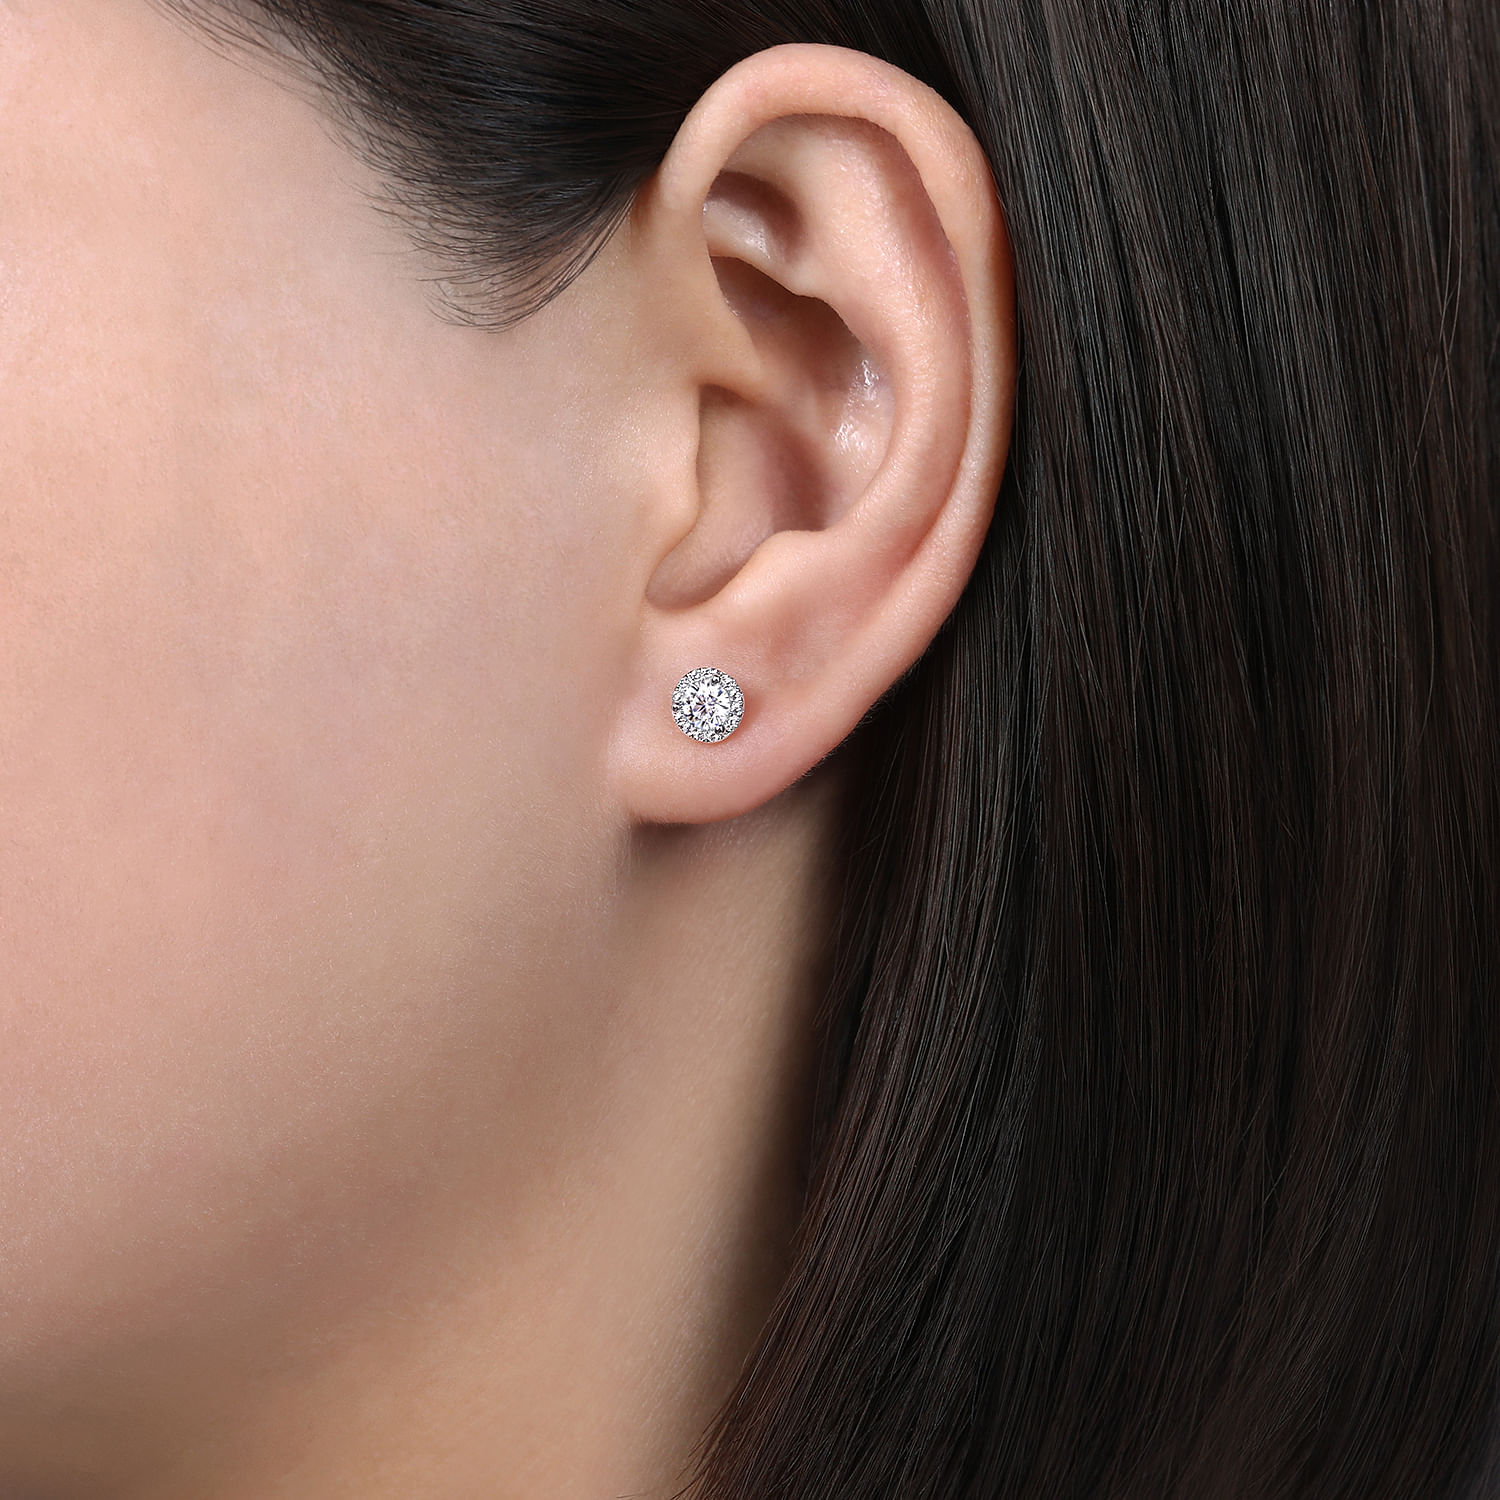 14K White Gold Diamond Halo Stud Earrings